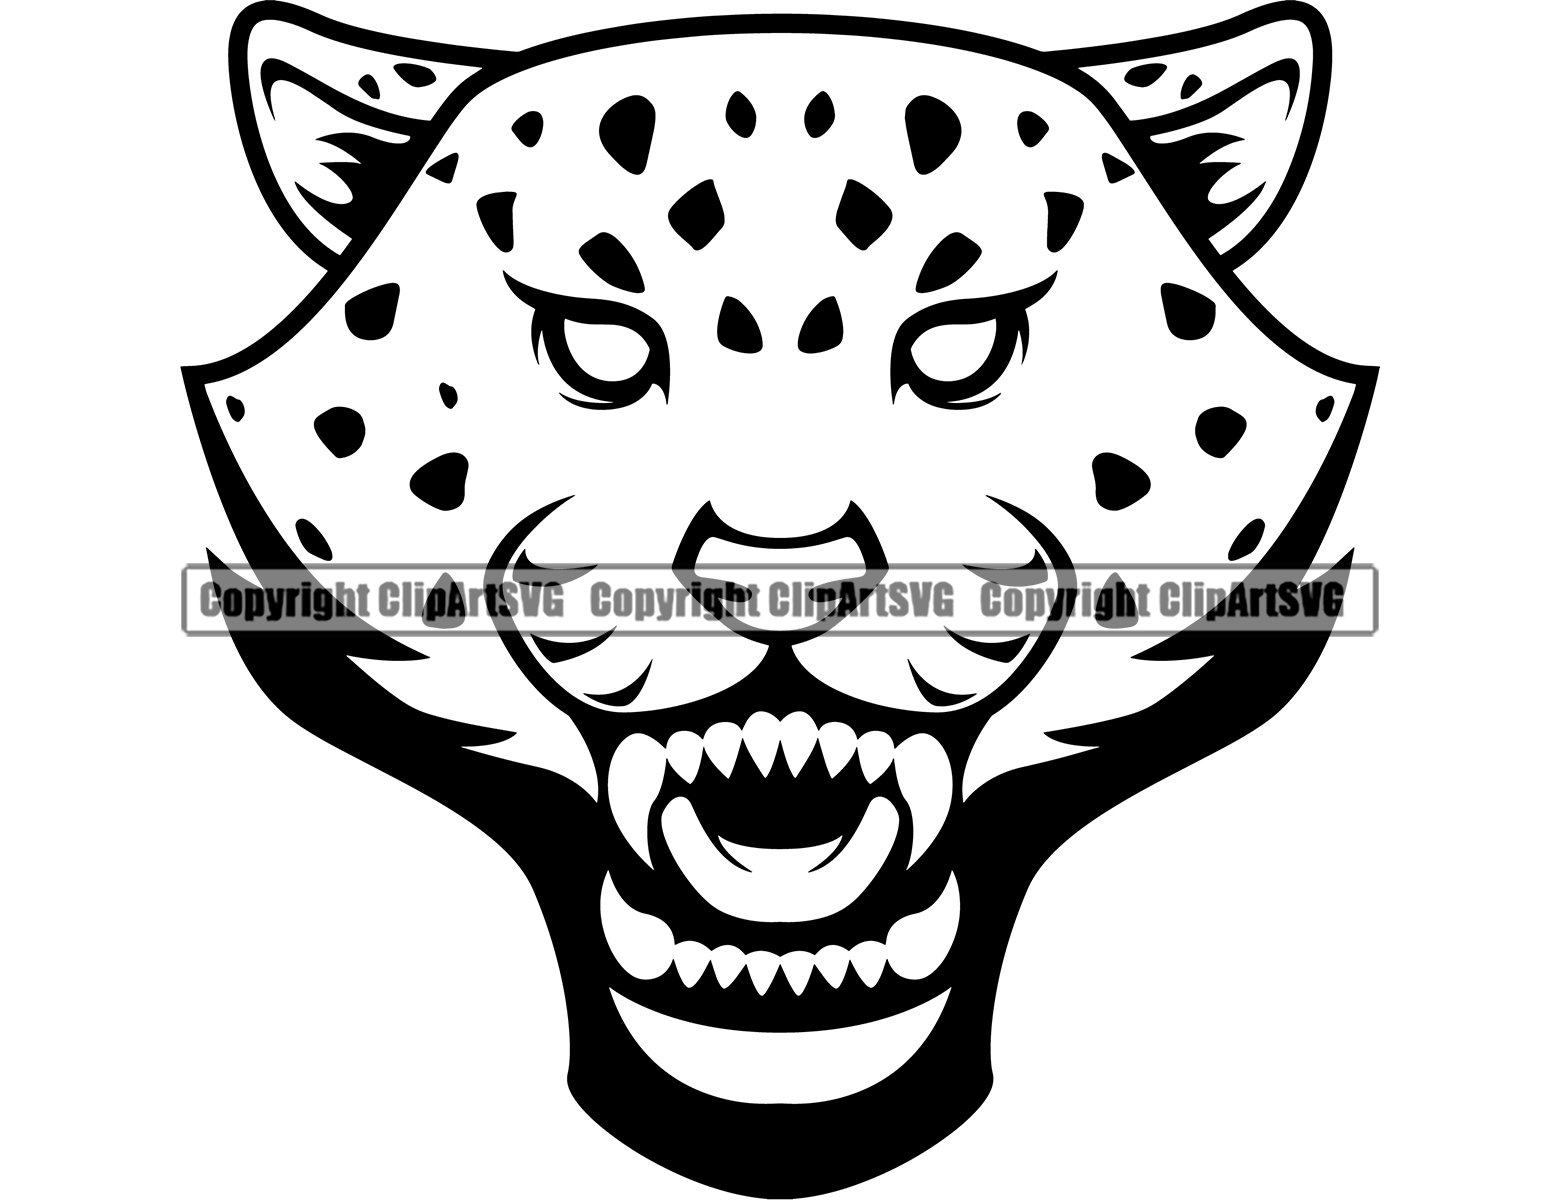 Cheetah Mascot School Team Head Face Sport eSport Game Emblem Sign Club Badge Art Icon Label Text Design Logo SVG PNG Vector Clipart Cutting